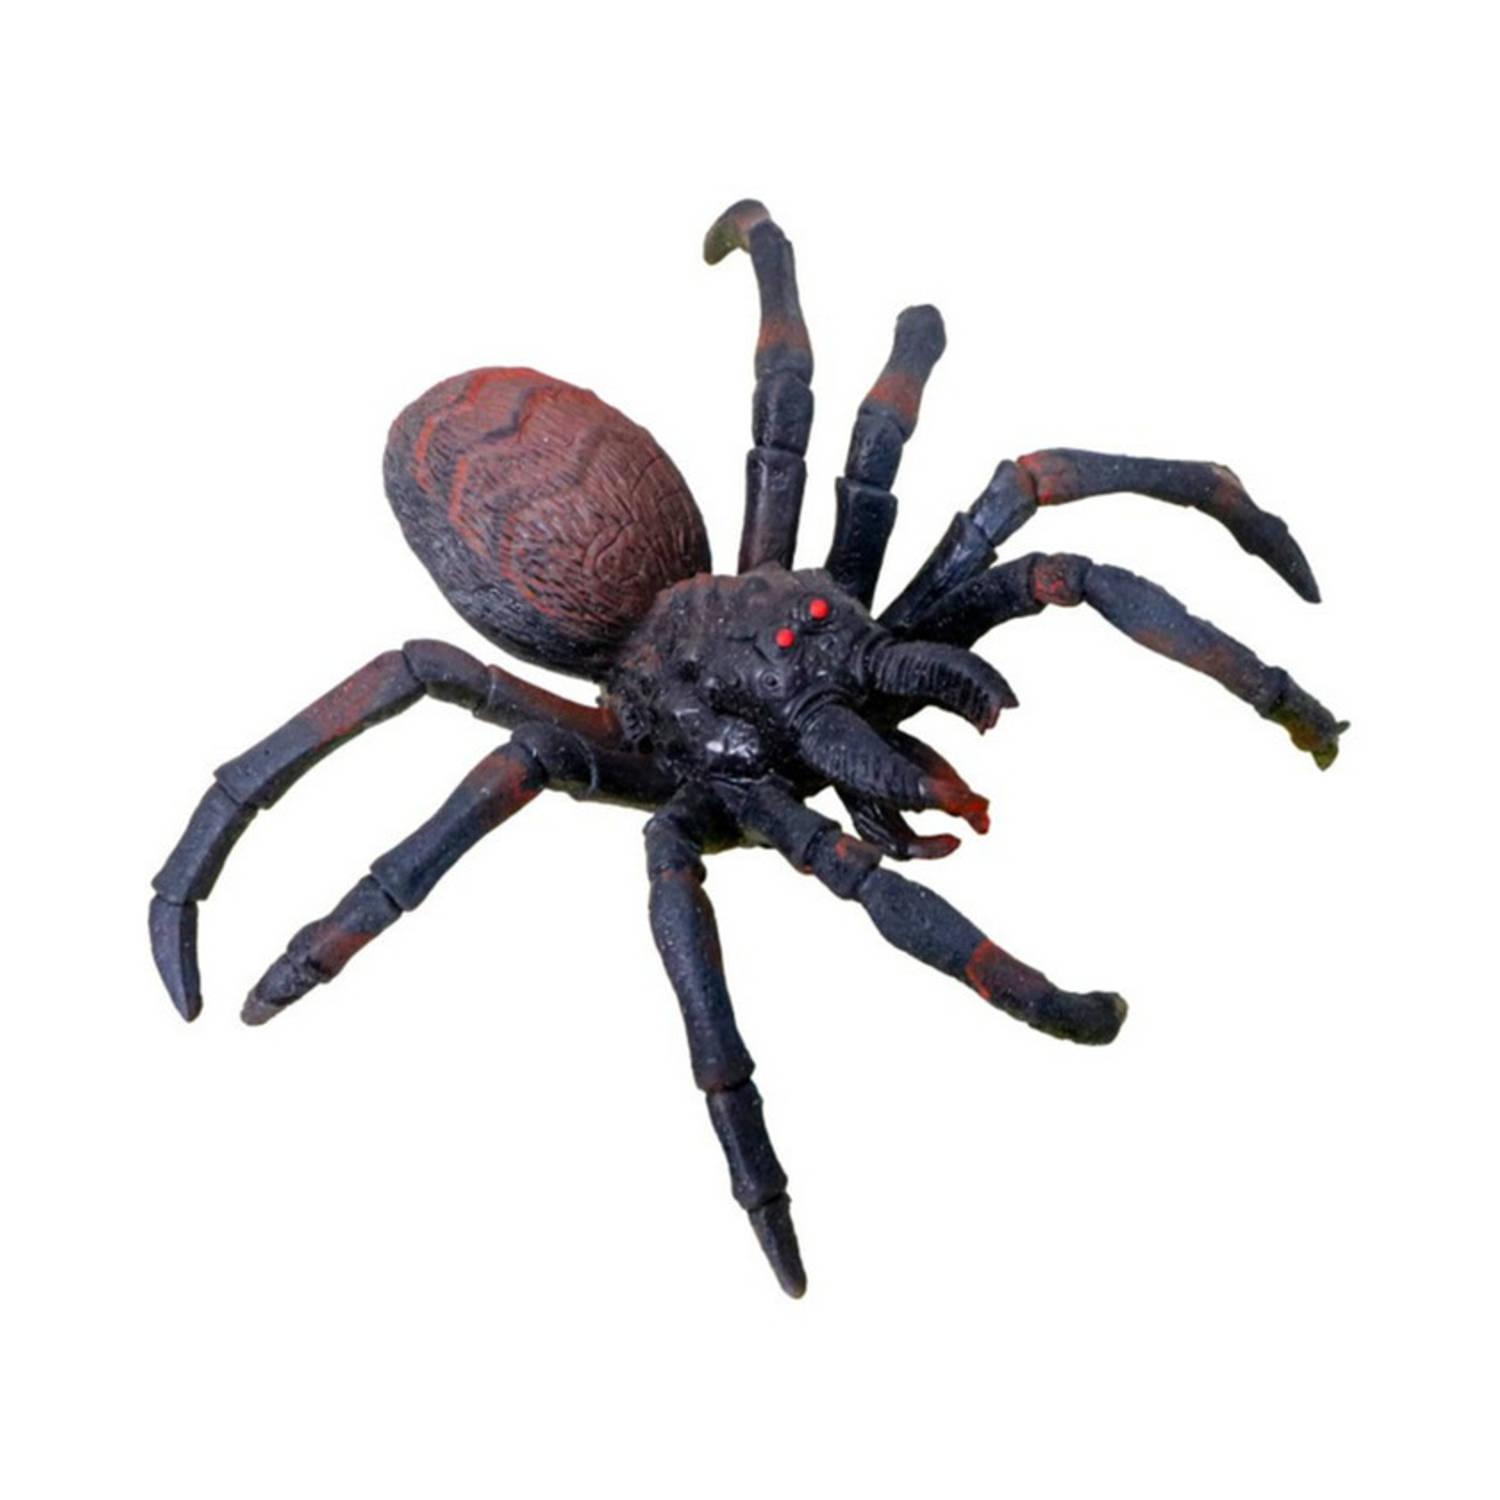 Chaks nep spin 15 cm - zwart/bruin - stretchy tarantula - Horror/griezel thema decoratie beestjes